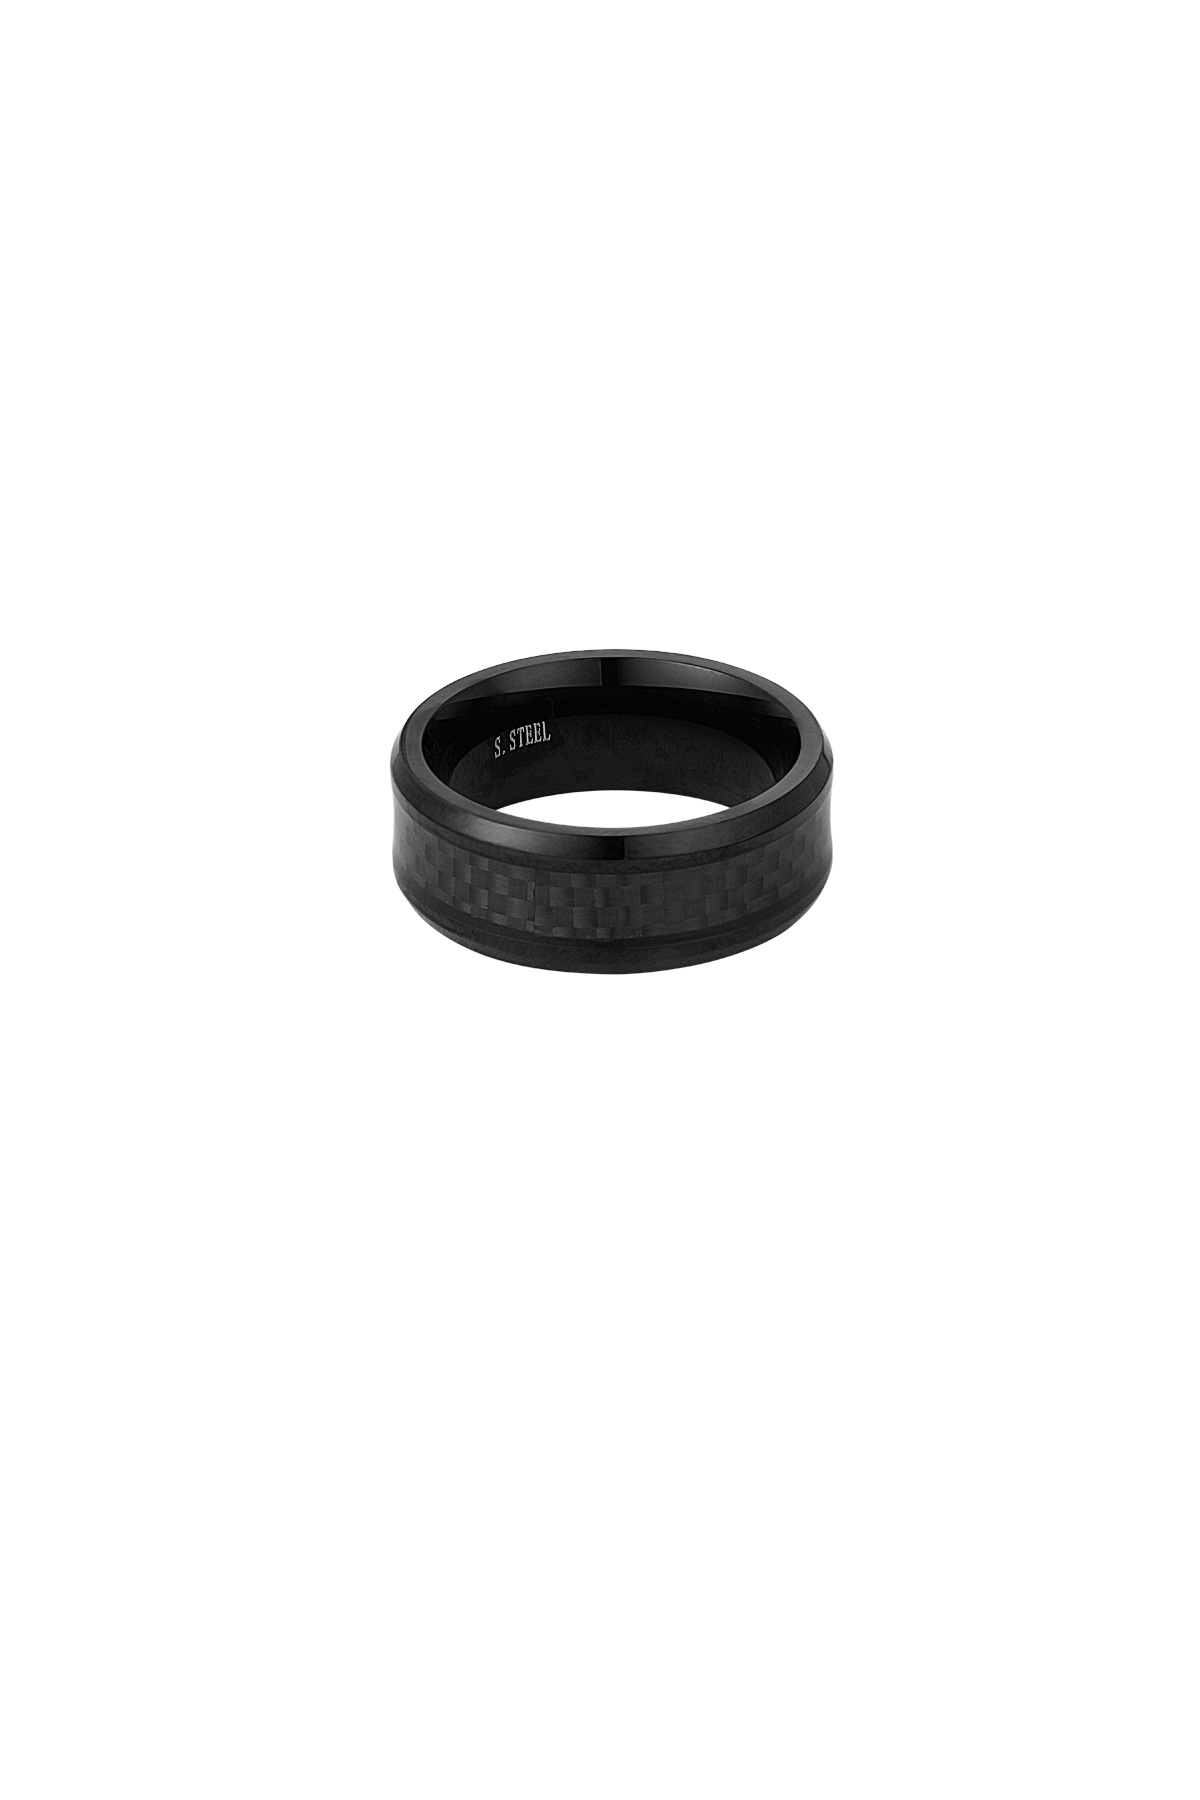 Erkek yüzüğü zikzak - siyah h5 